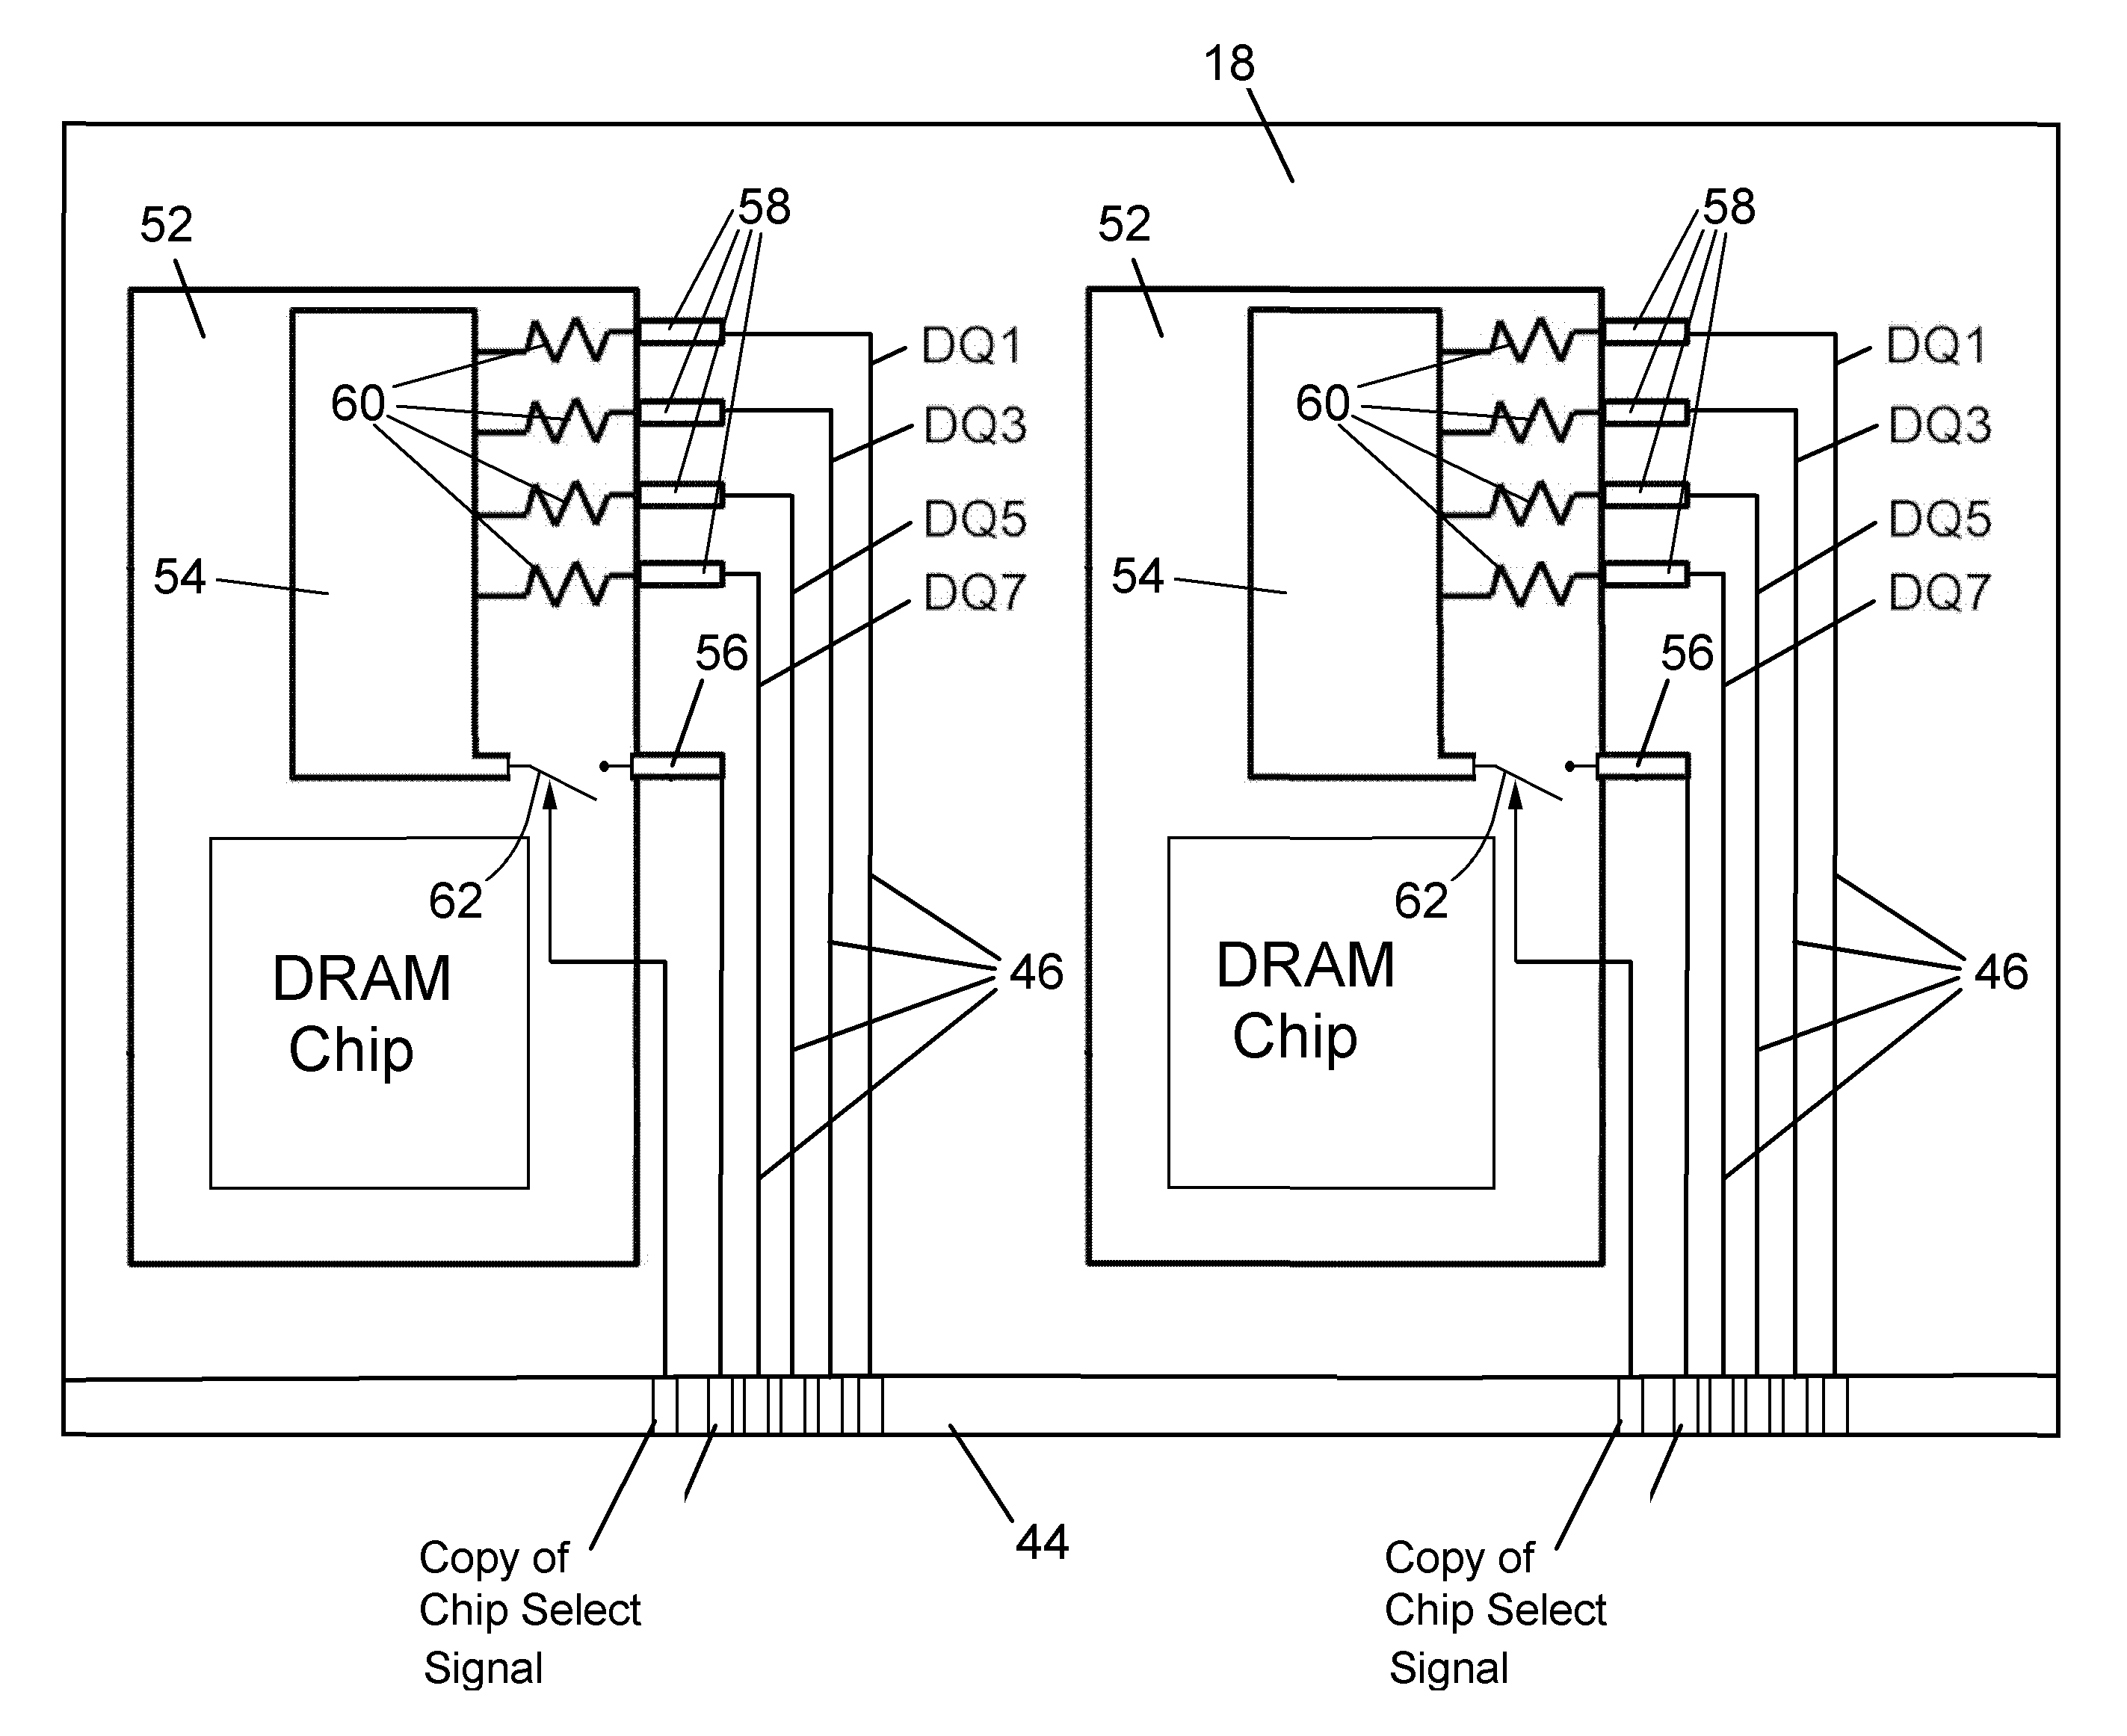 Memory module having on-package or on-module termination